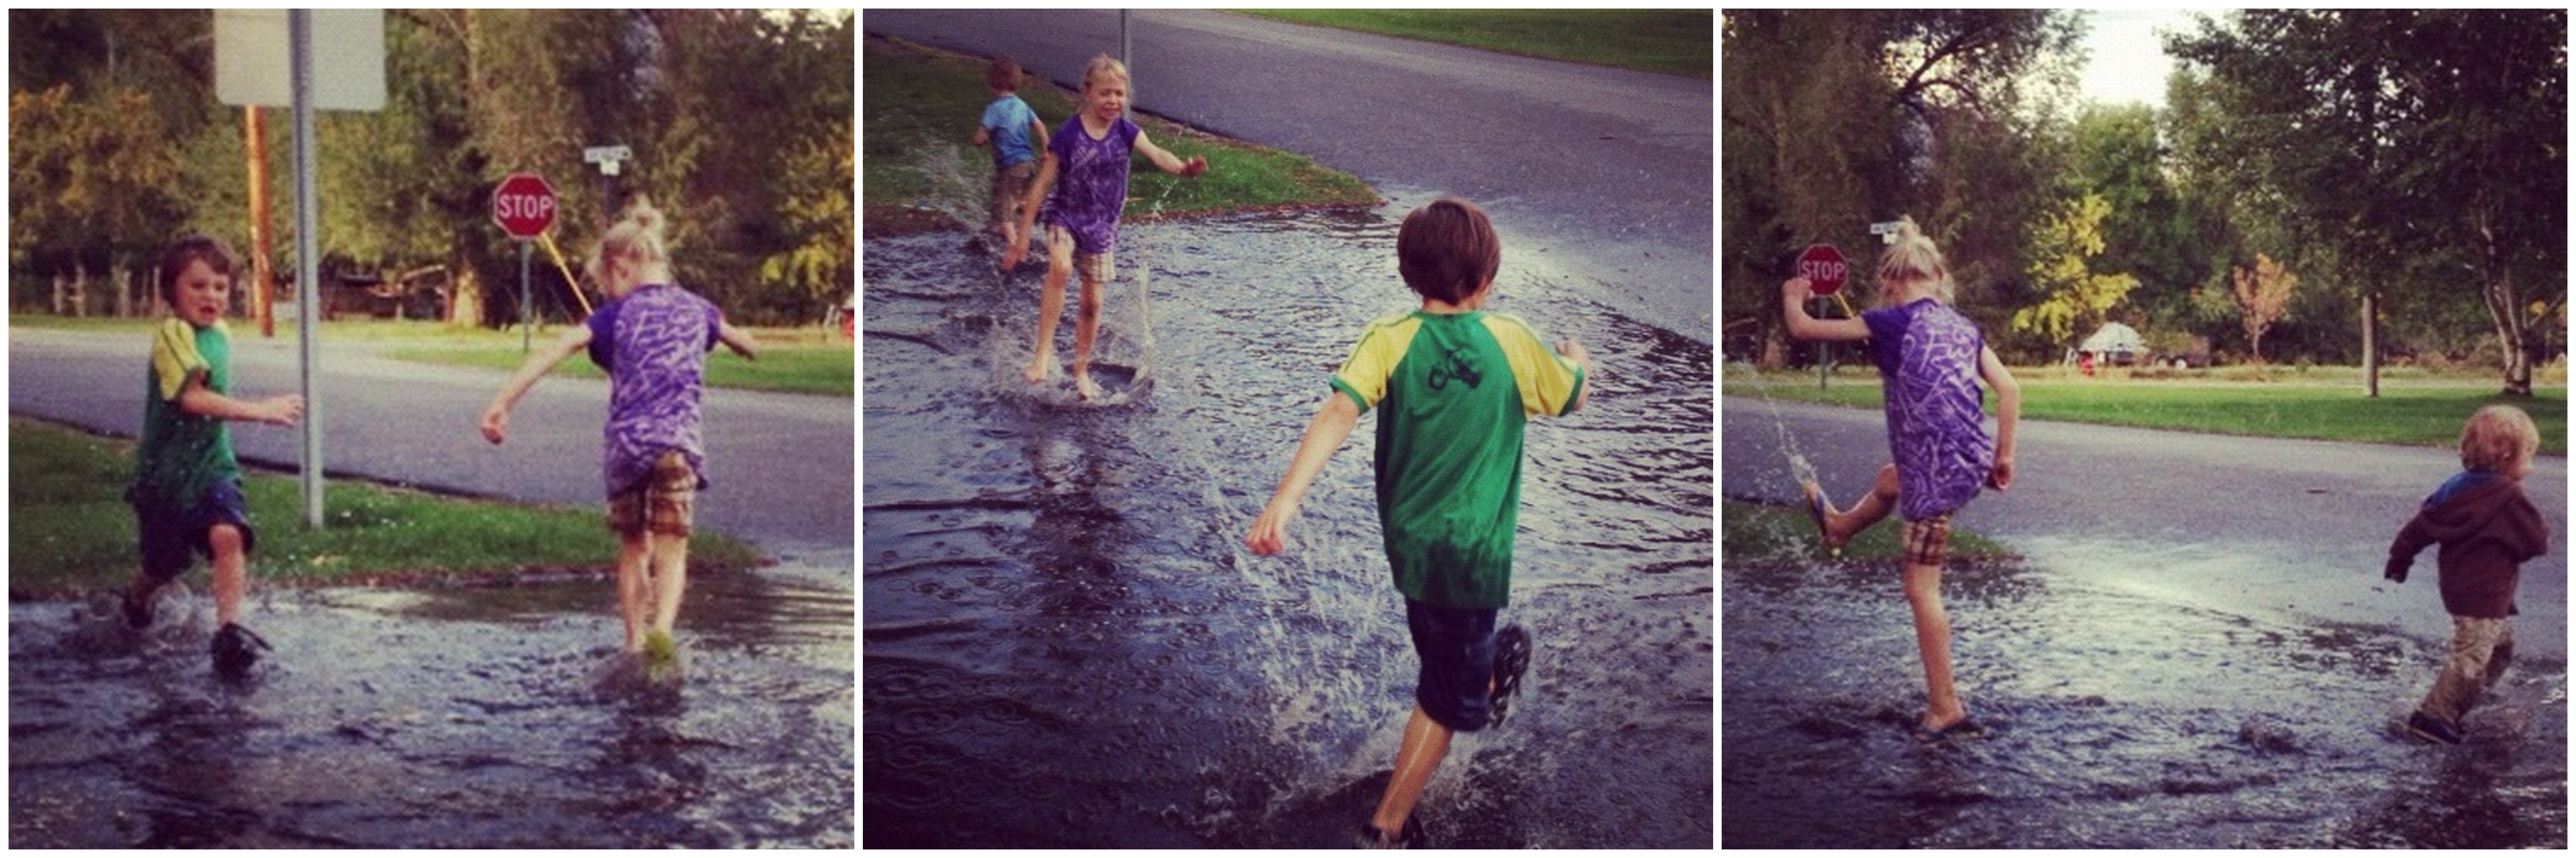 kids running through puddle instagram